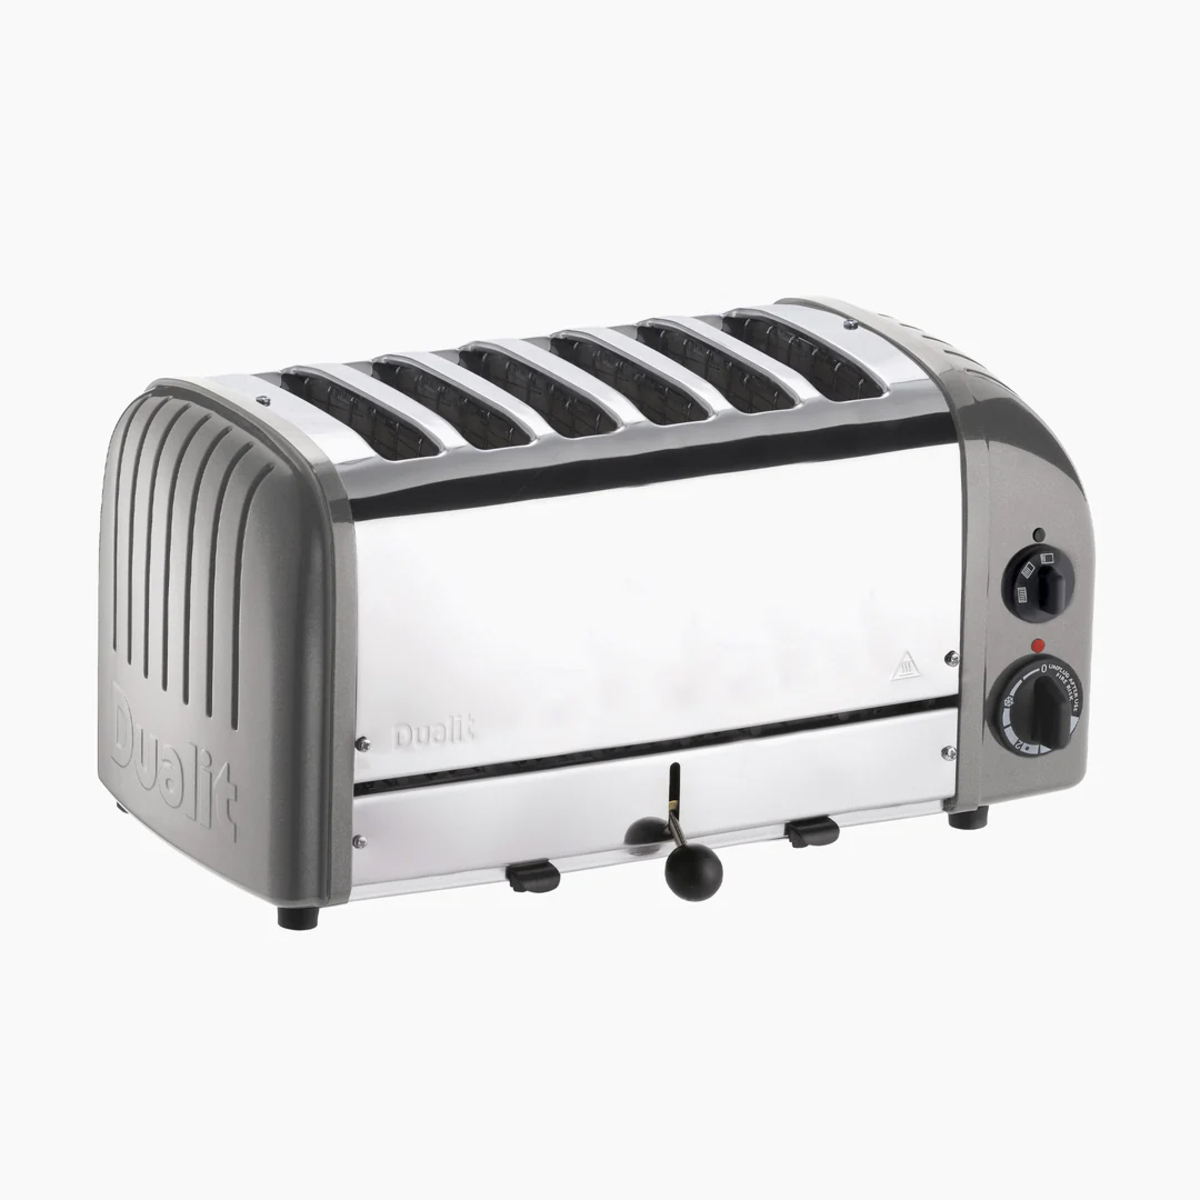 Dualit 60147 6 Slot Classic Toaster, Metallic Silver